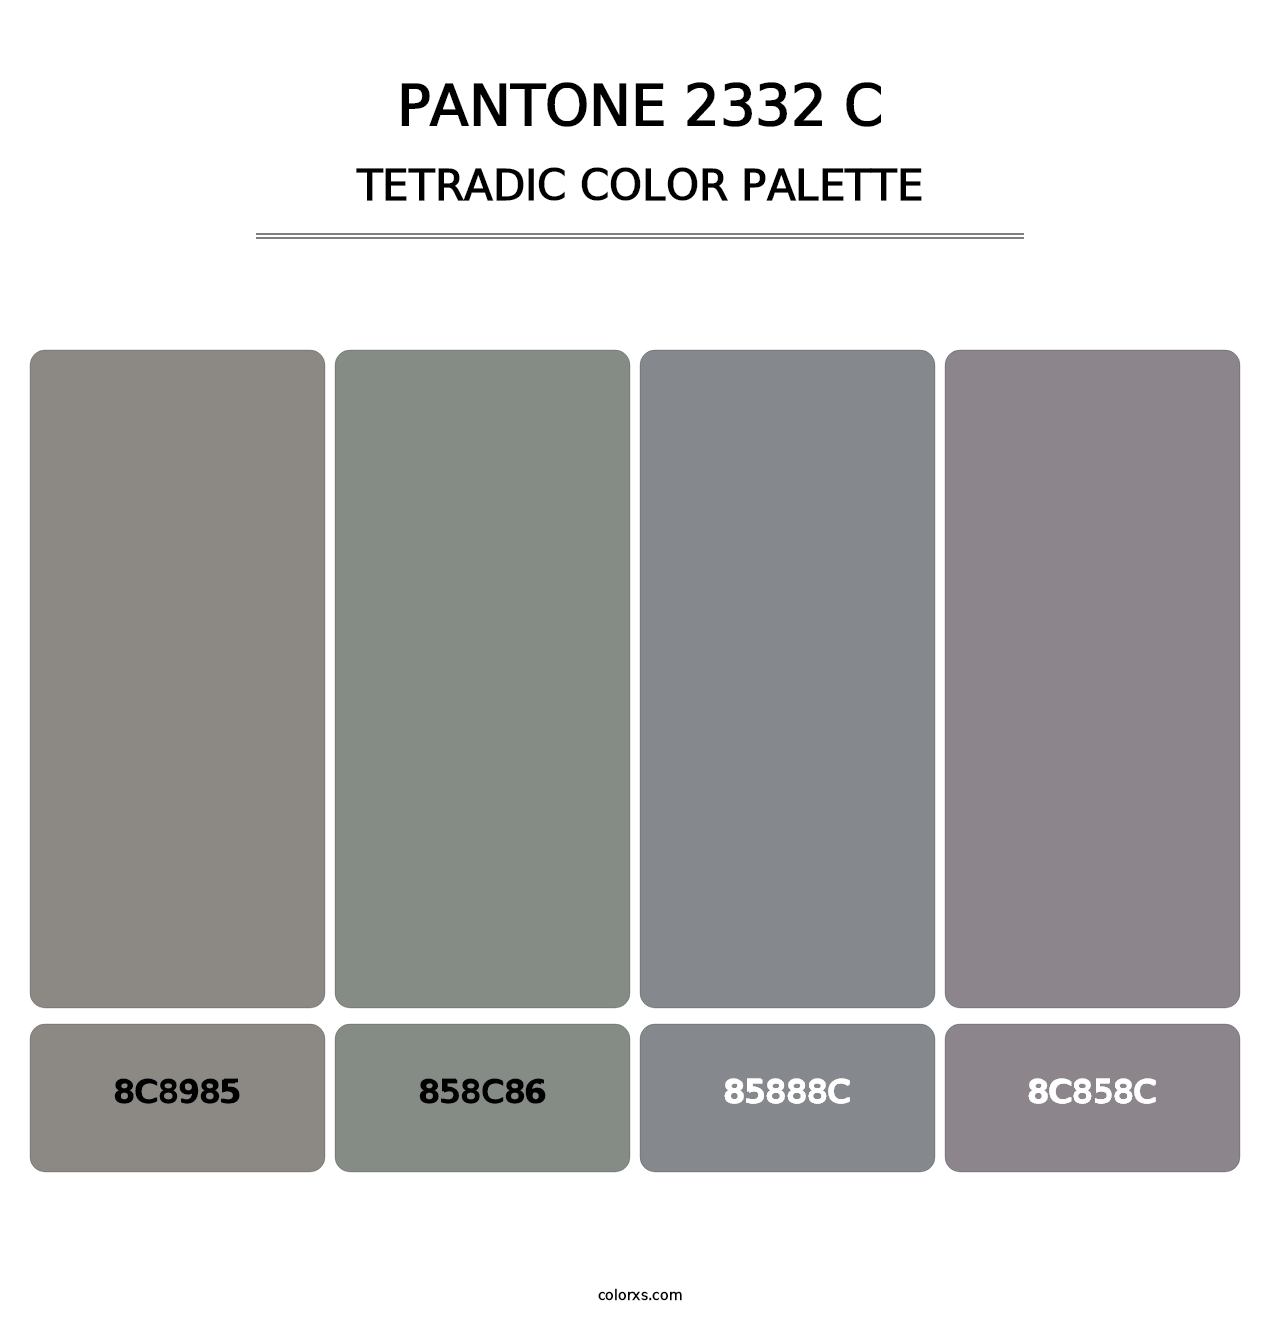 PANTONE 2332 C - Tetradic Color Palette